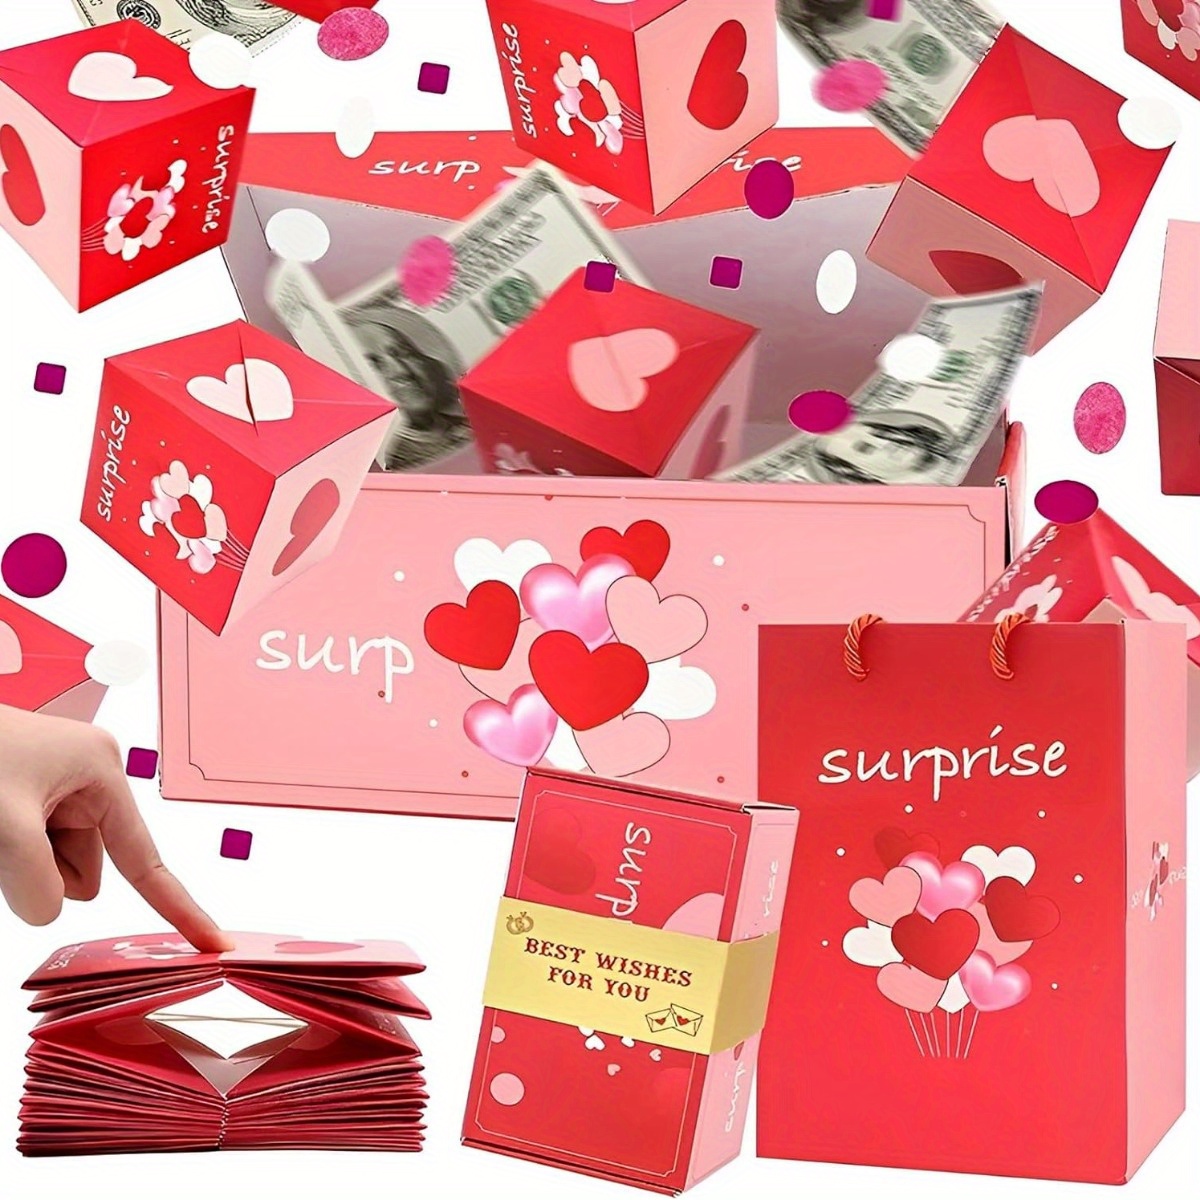 Unique design valentine gift boxes